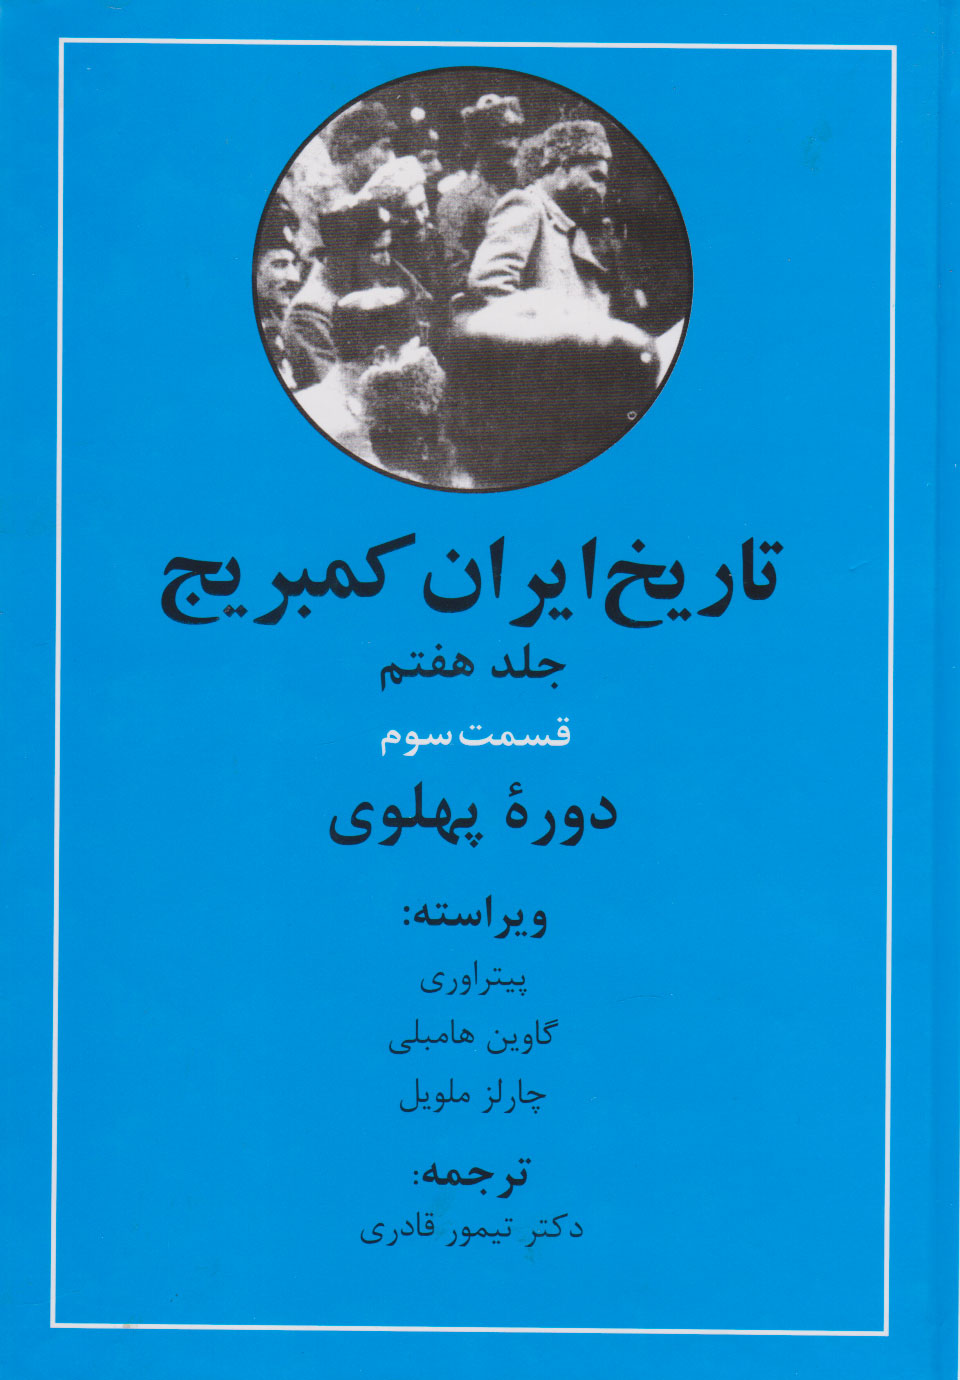  کتاب تاریخ ایران کمبریج (دوره پهلوی)